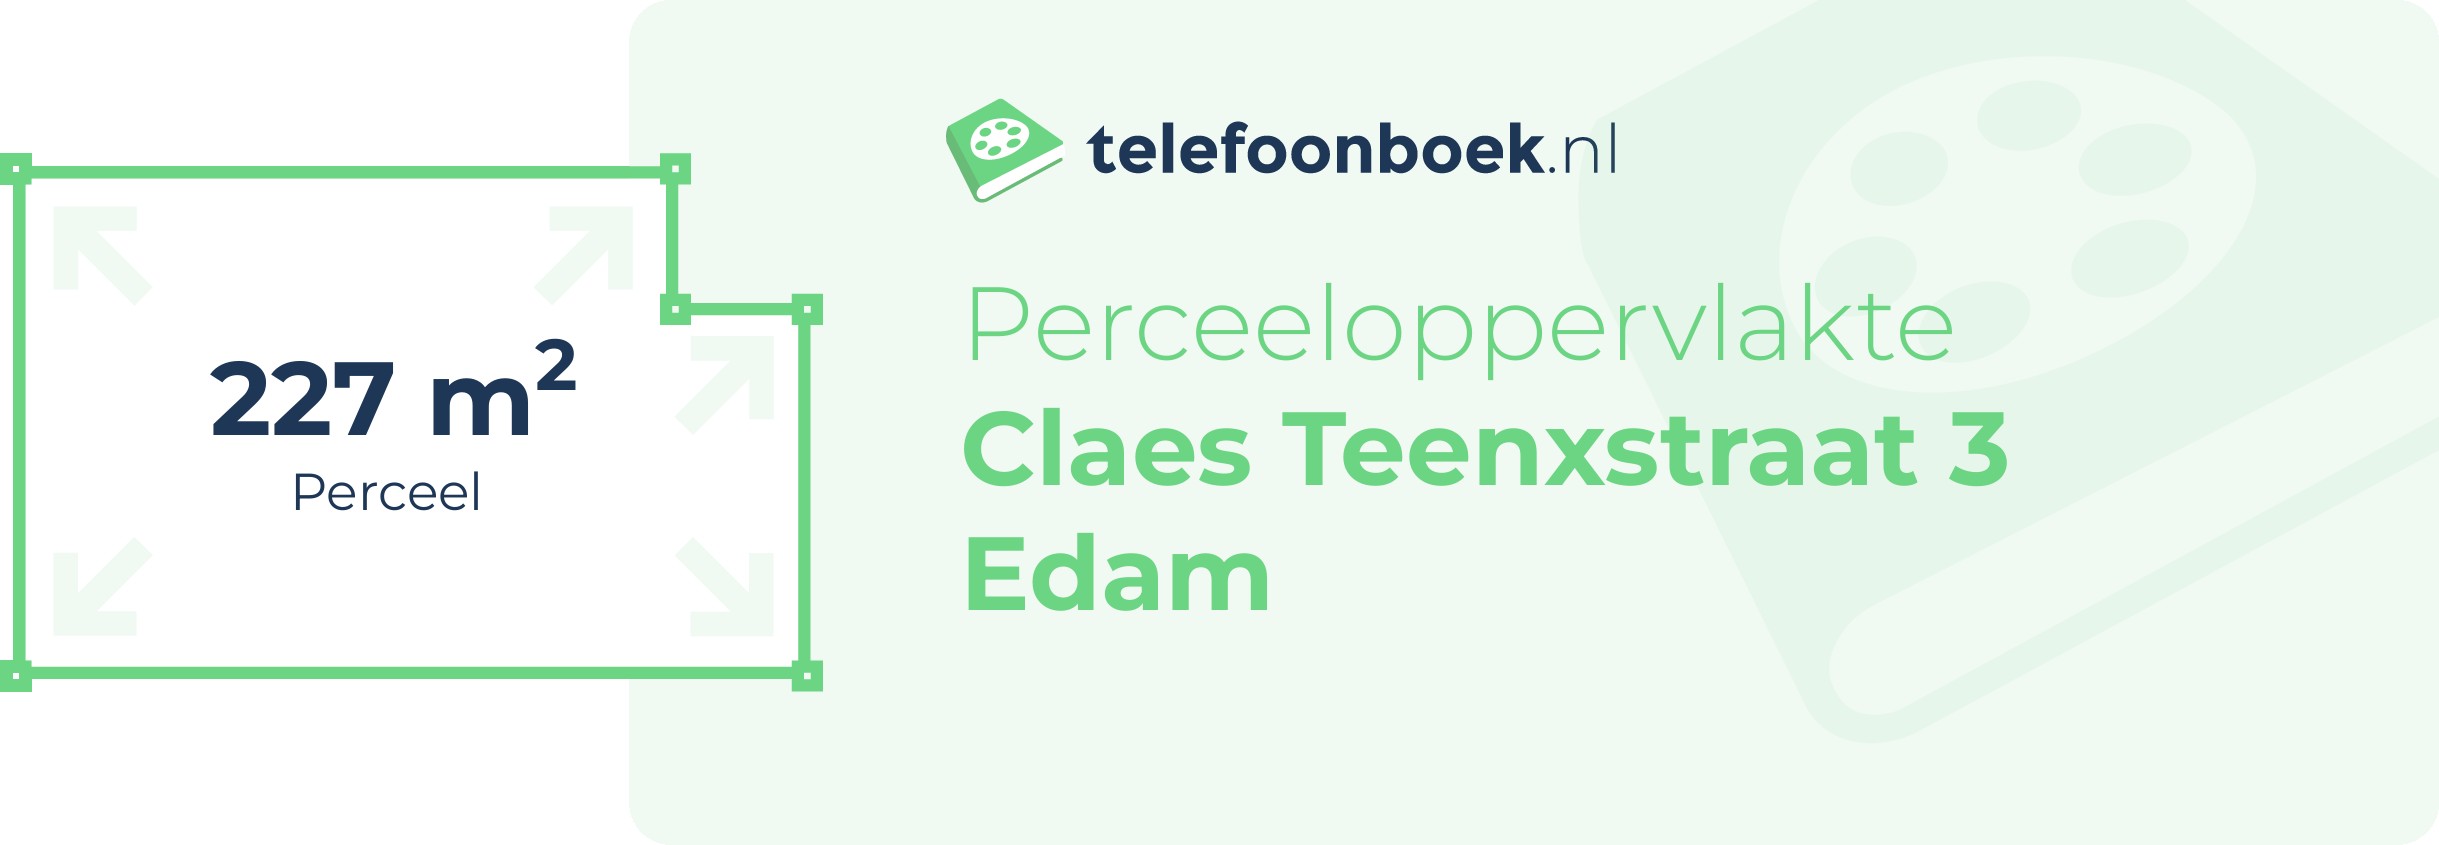 Perceeloppervlakte Claes Teenxstraat 3 Edam